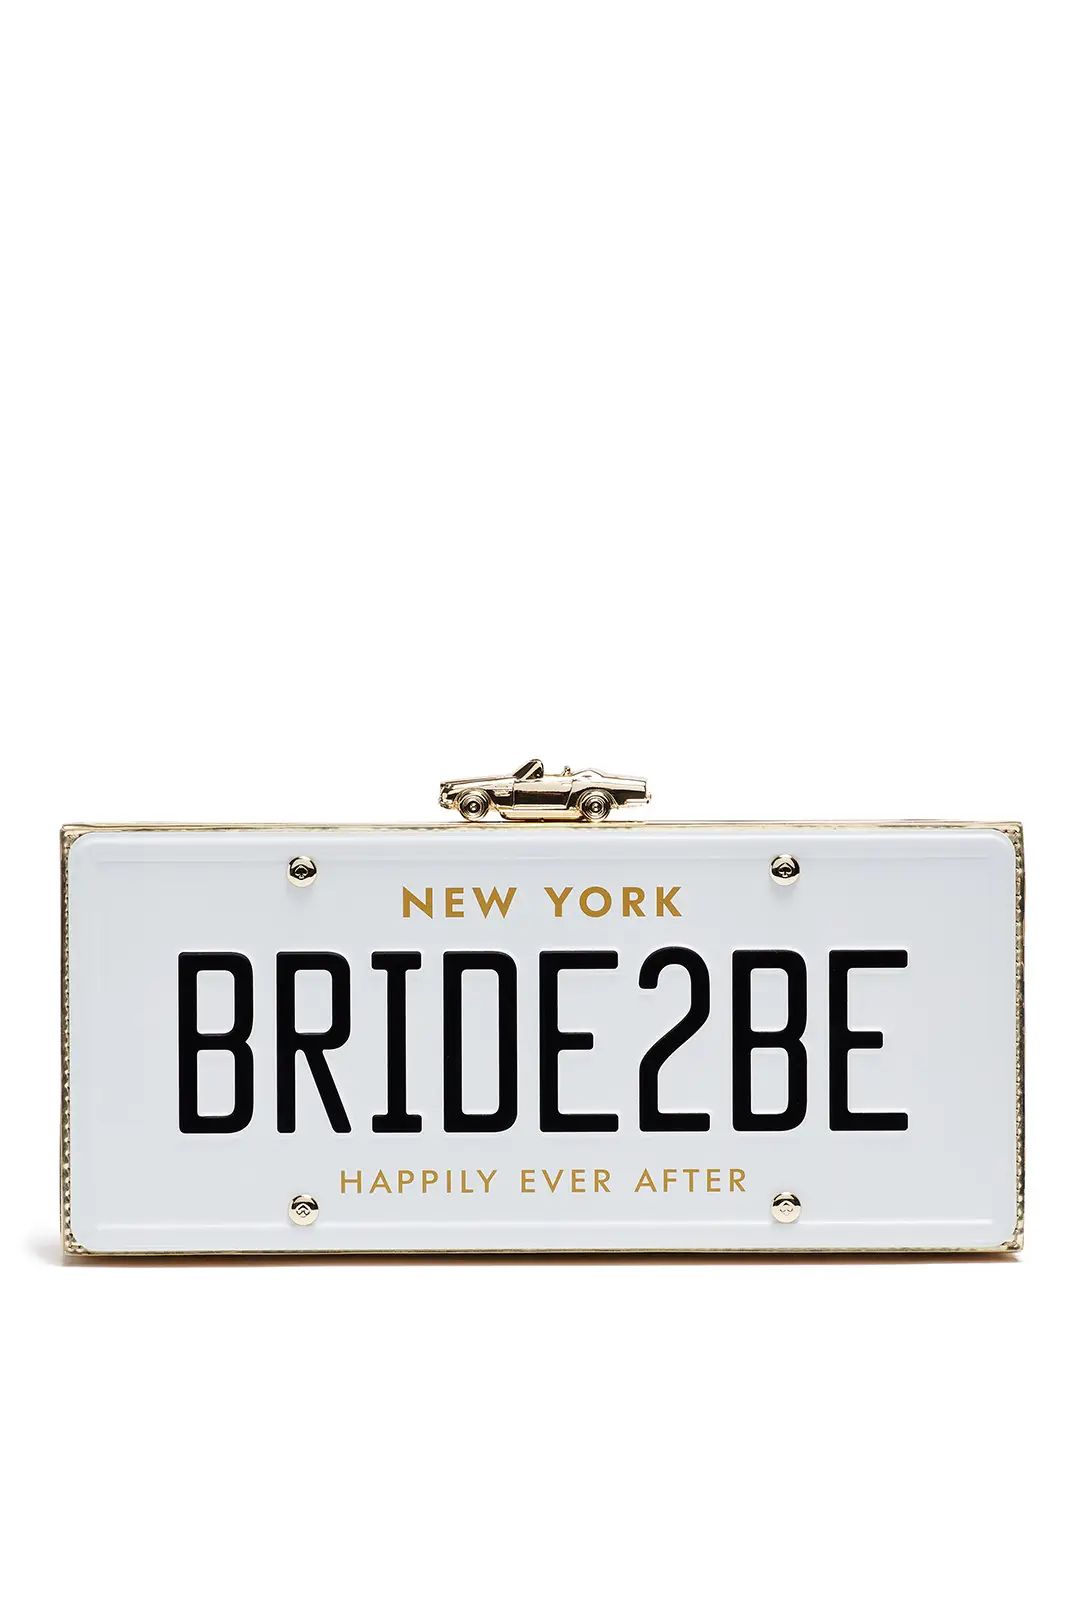 kate spade new york accessories Wedding Belles Bride2Be Clutch | Rent The Runway